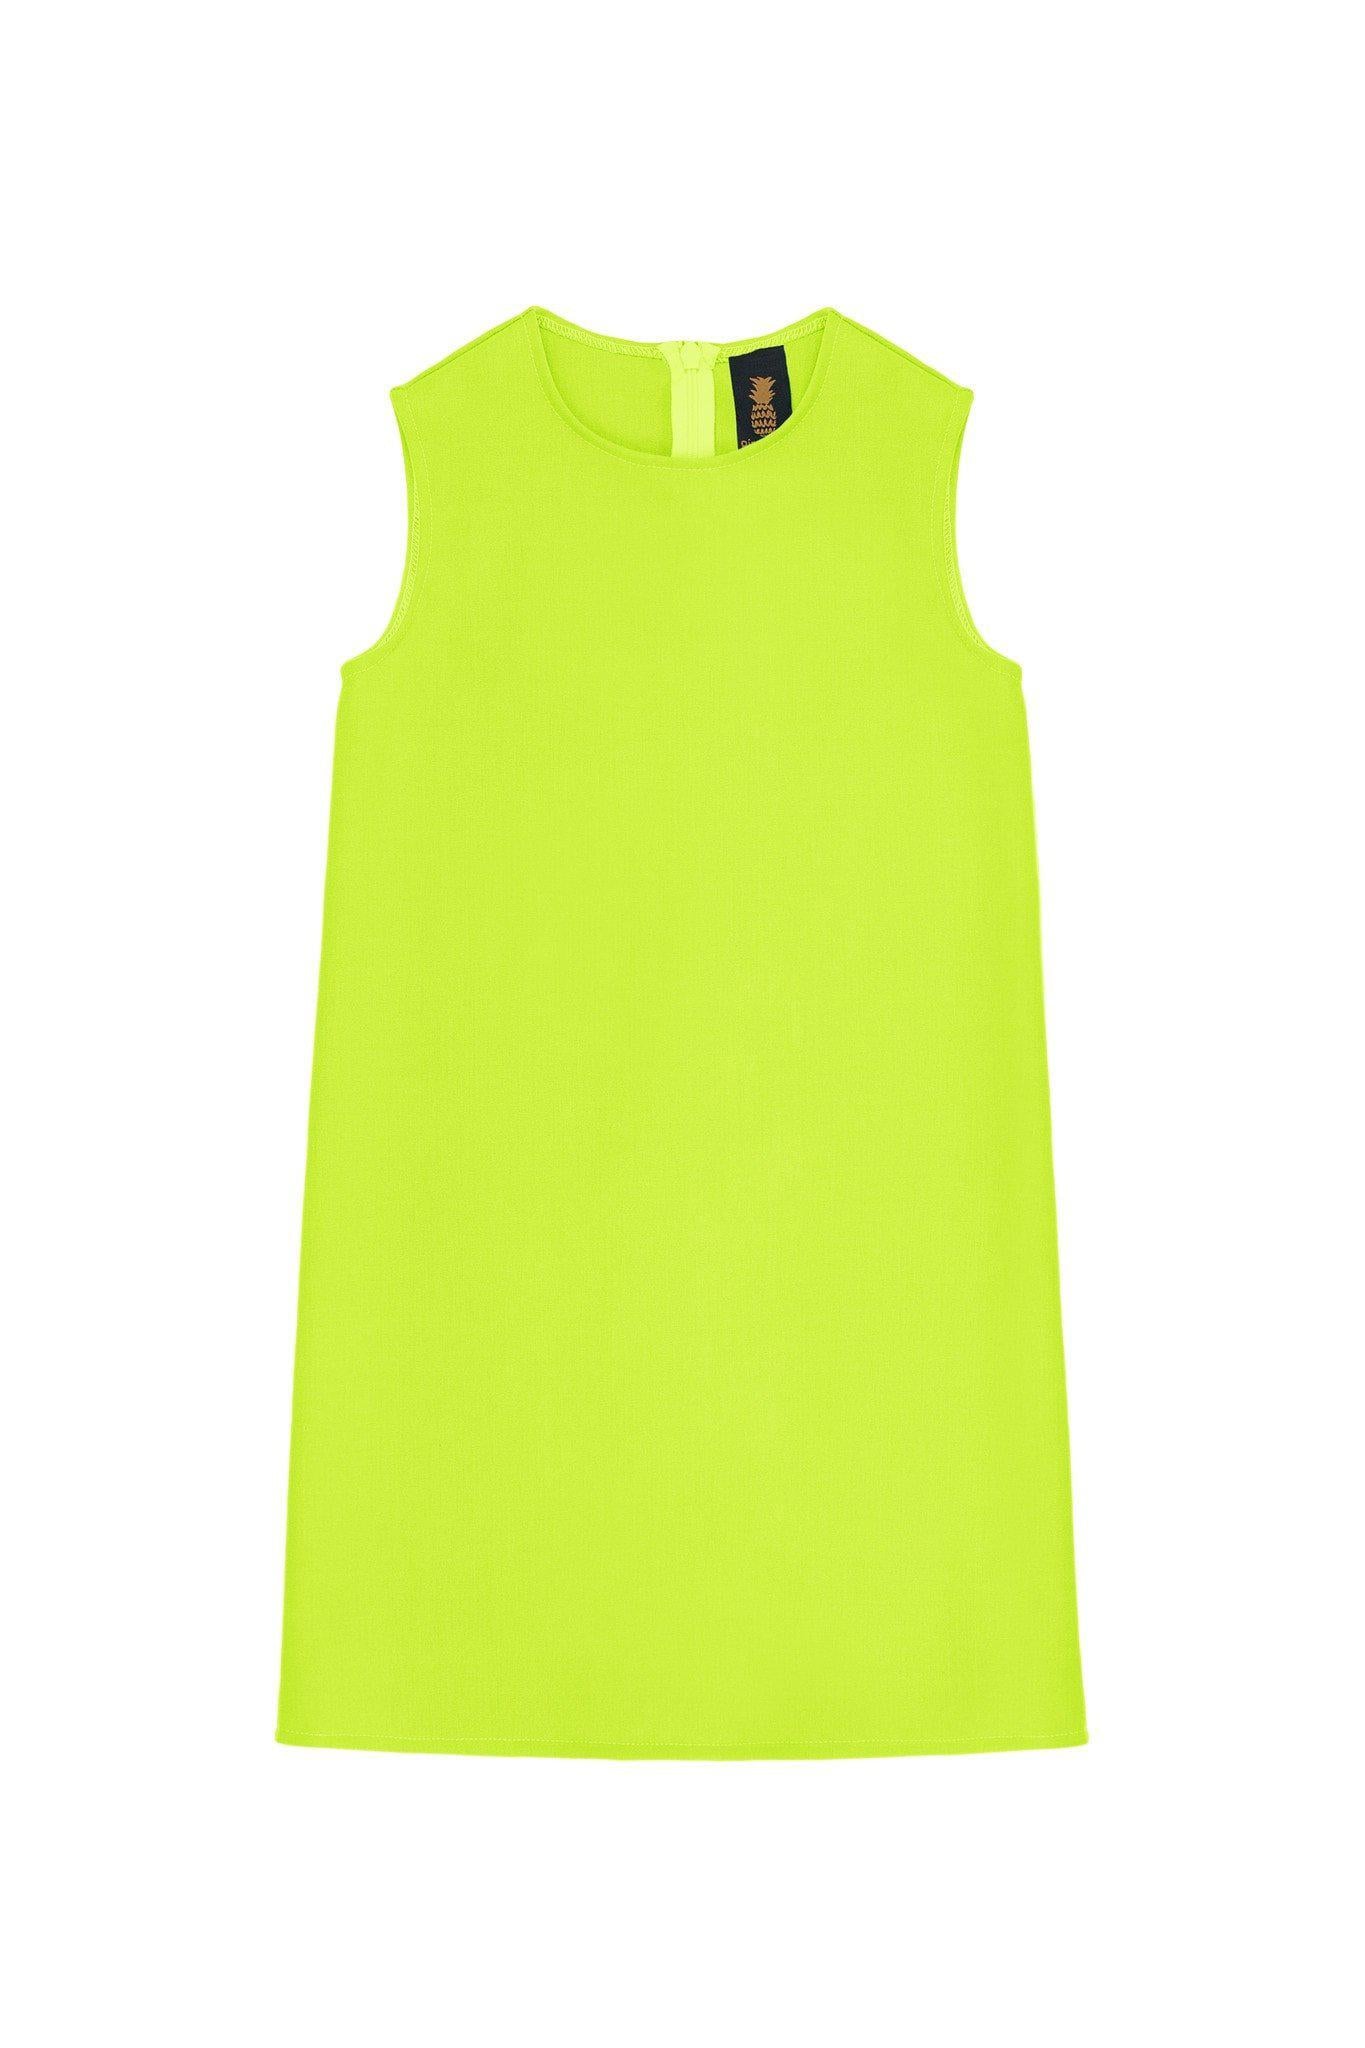 Neon Yellow Lime Green Sleeveless Stylish Cute Summer Shift Dress Girls - Pineapple Clothing